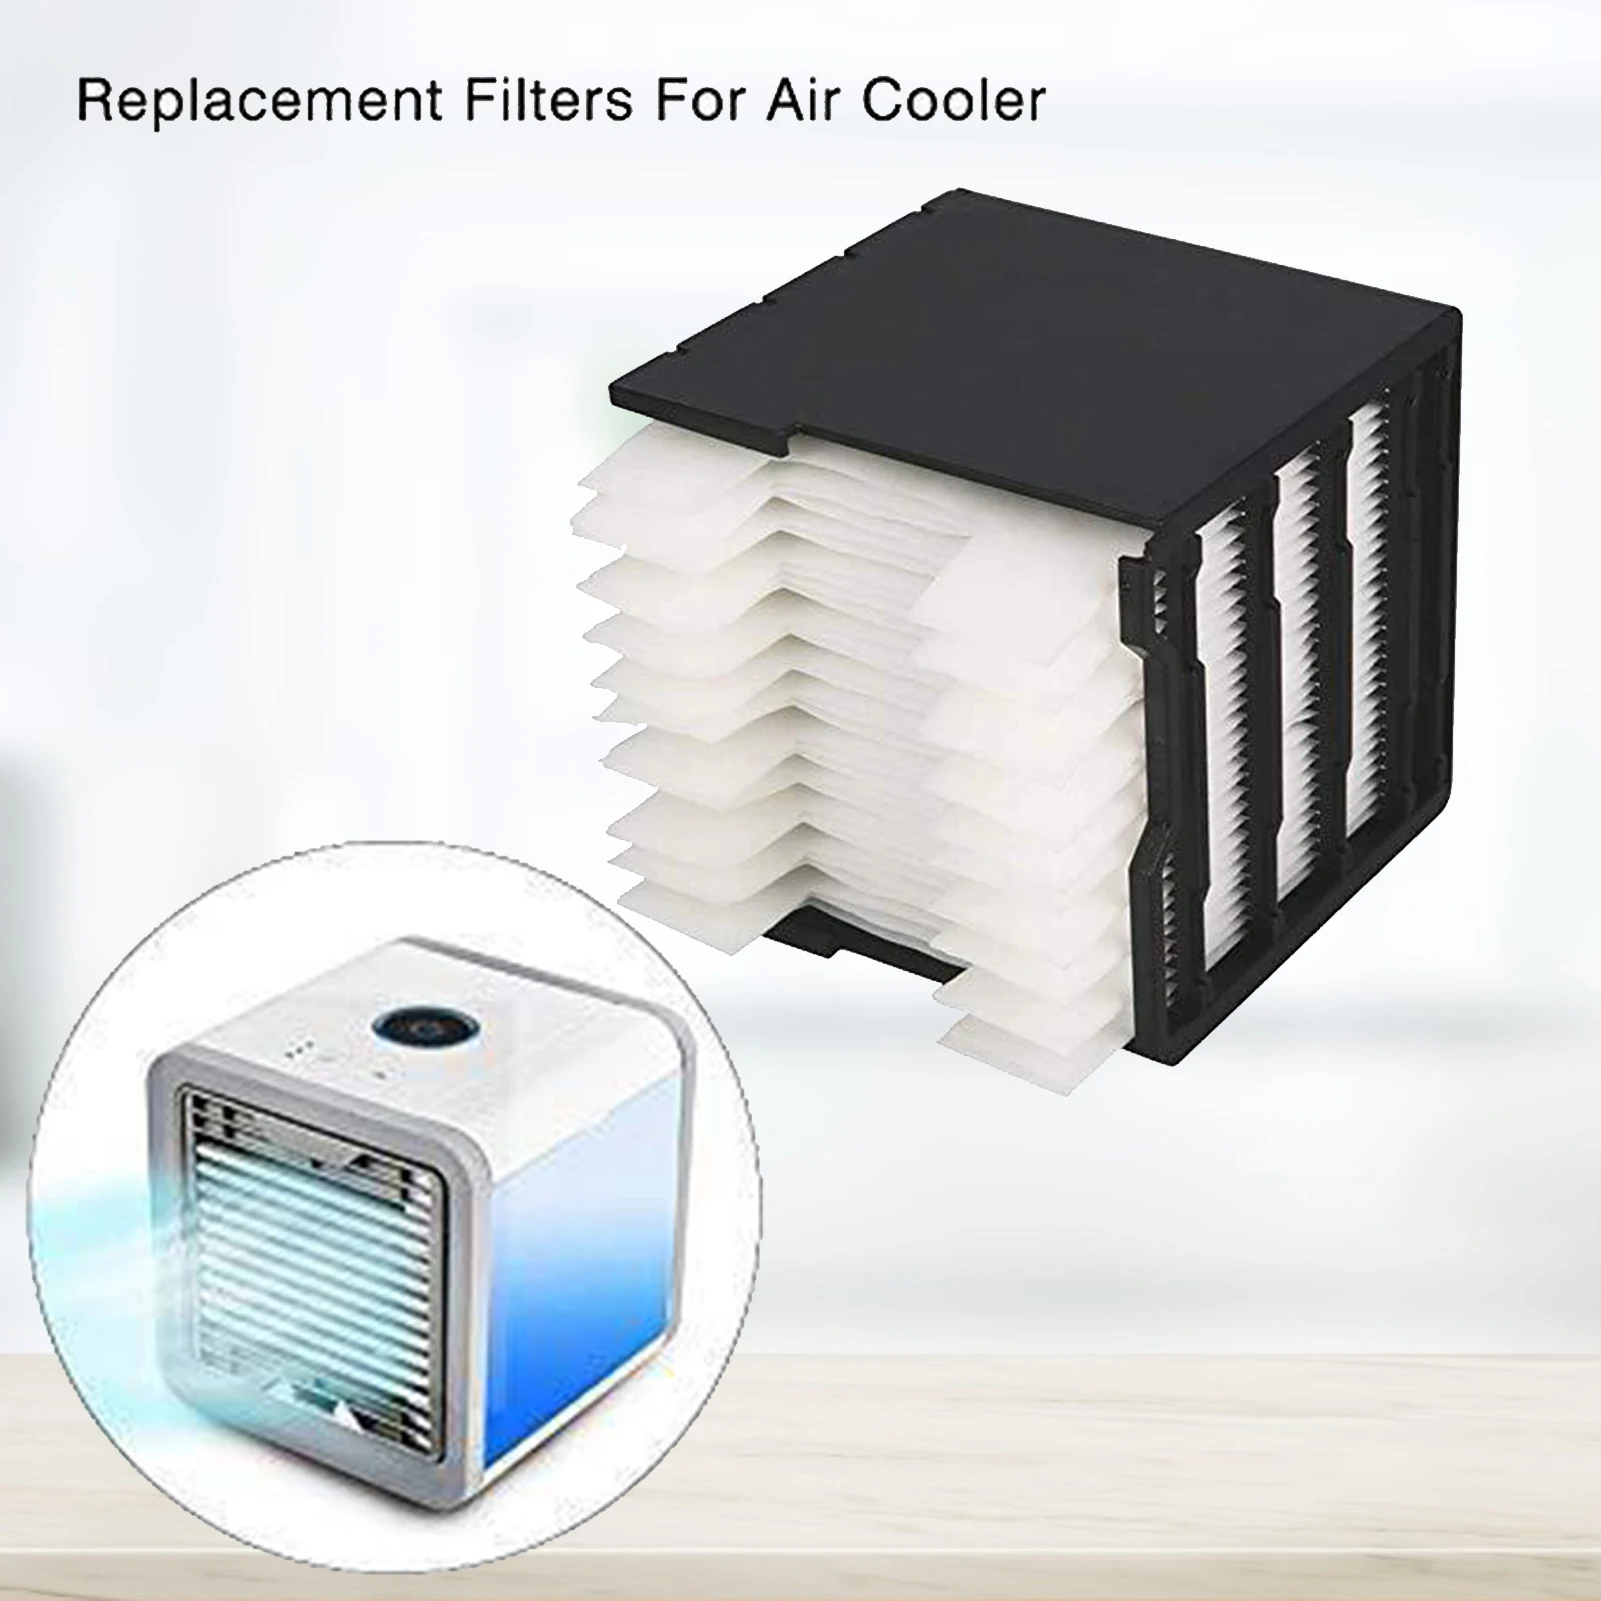 Lin XH Filtro de reemplazo de Papel del Filtro del Enfriador de Aire Mini Ventilador de Aire Acondicionado refrigerador Filtro Especial 24pcs 